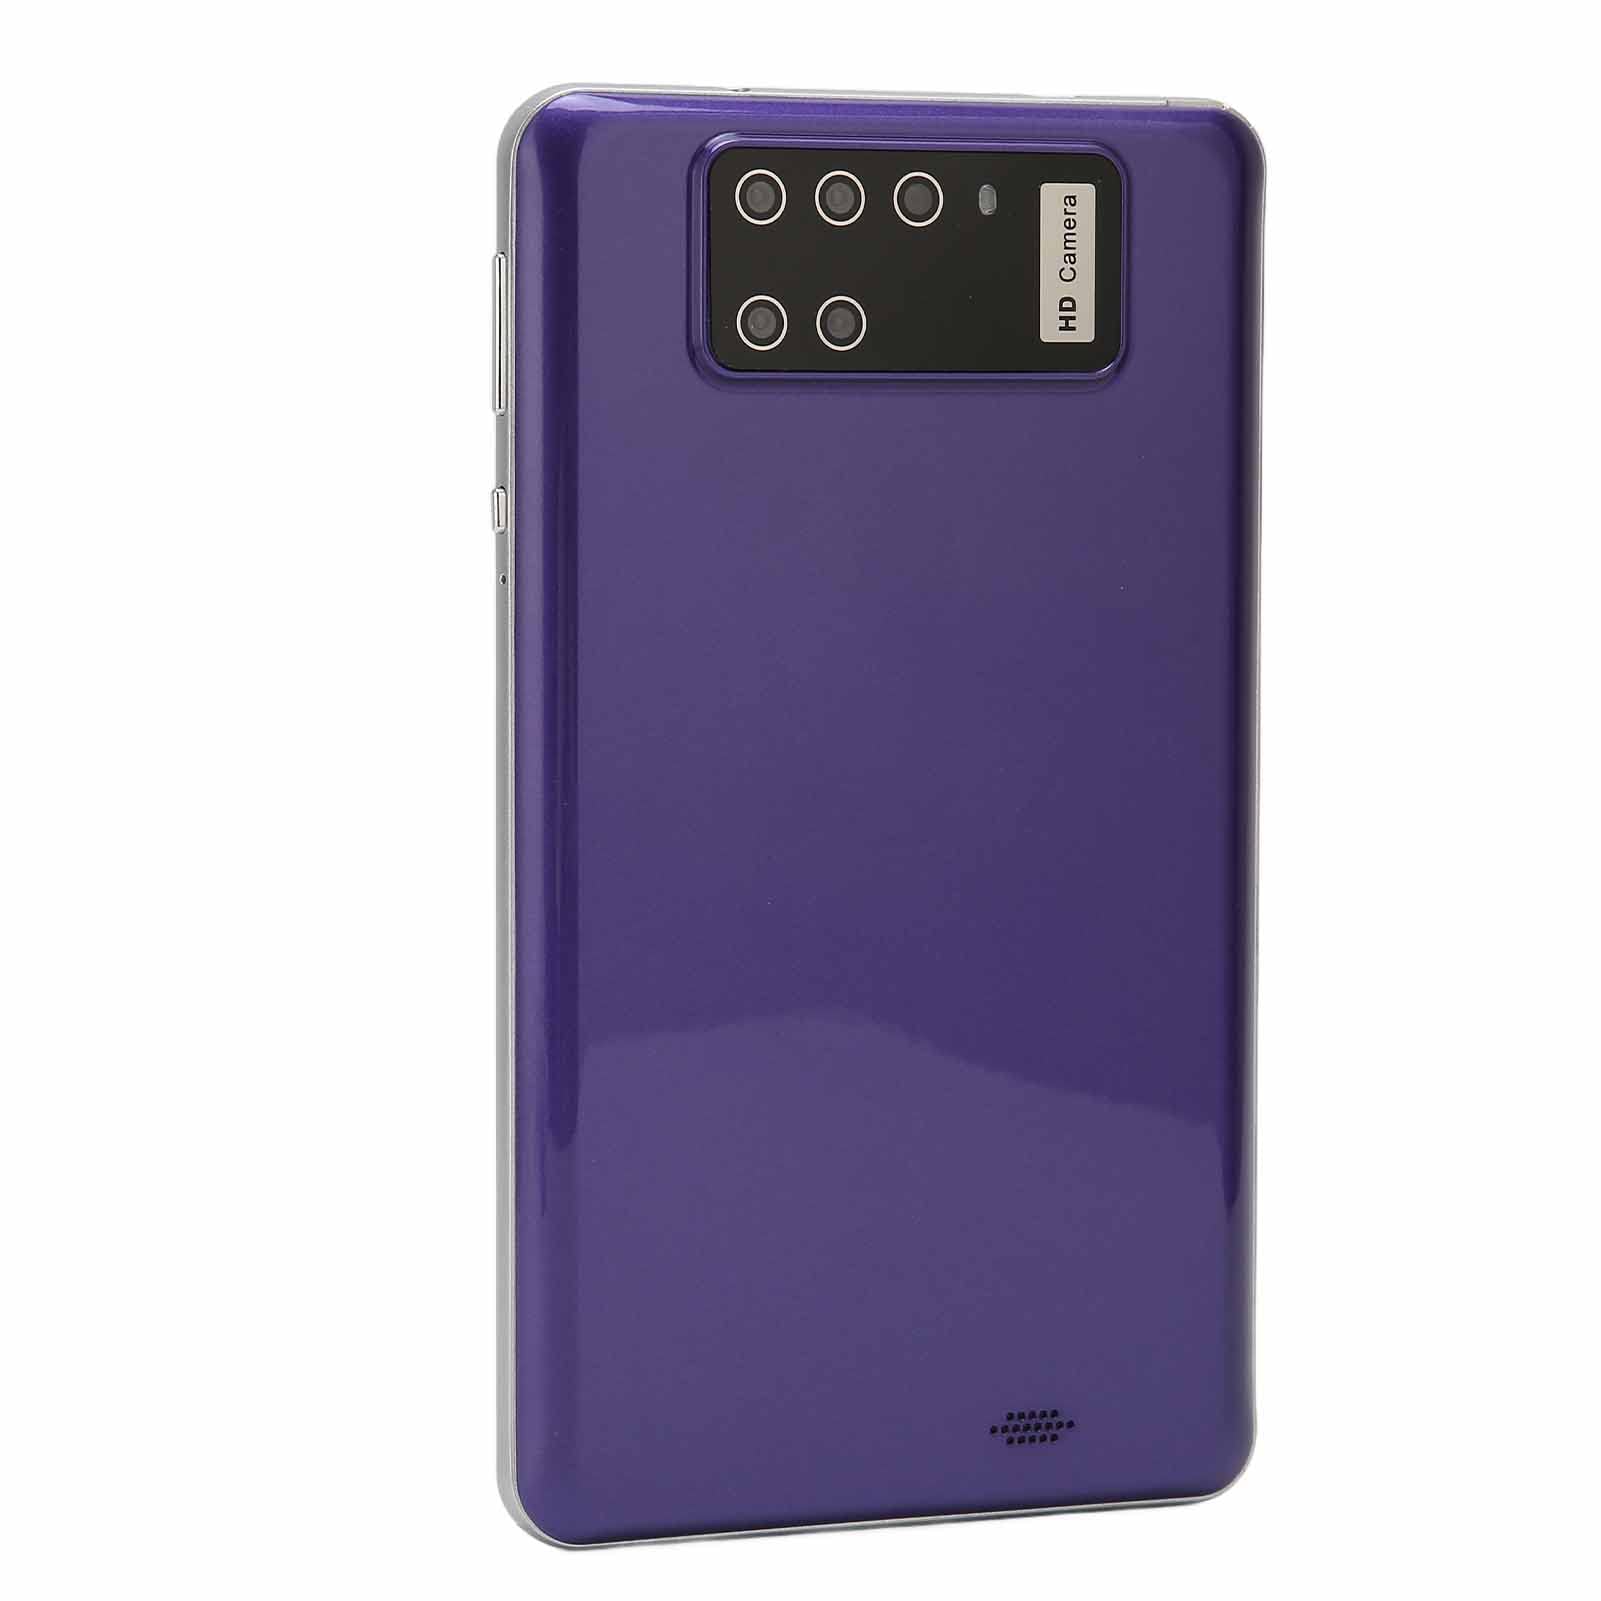 Bewinner 7inch IPS HD Screen Call Tablet, 2GB 32GB Octa Core 5GHz WiFi Dual SIM Card 3G Phone Calls, for 11 (US Plug)